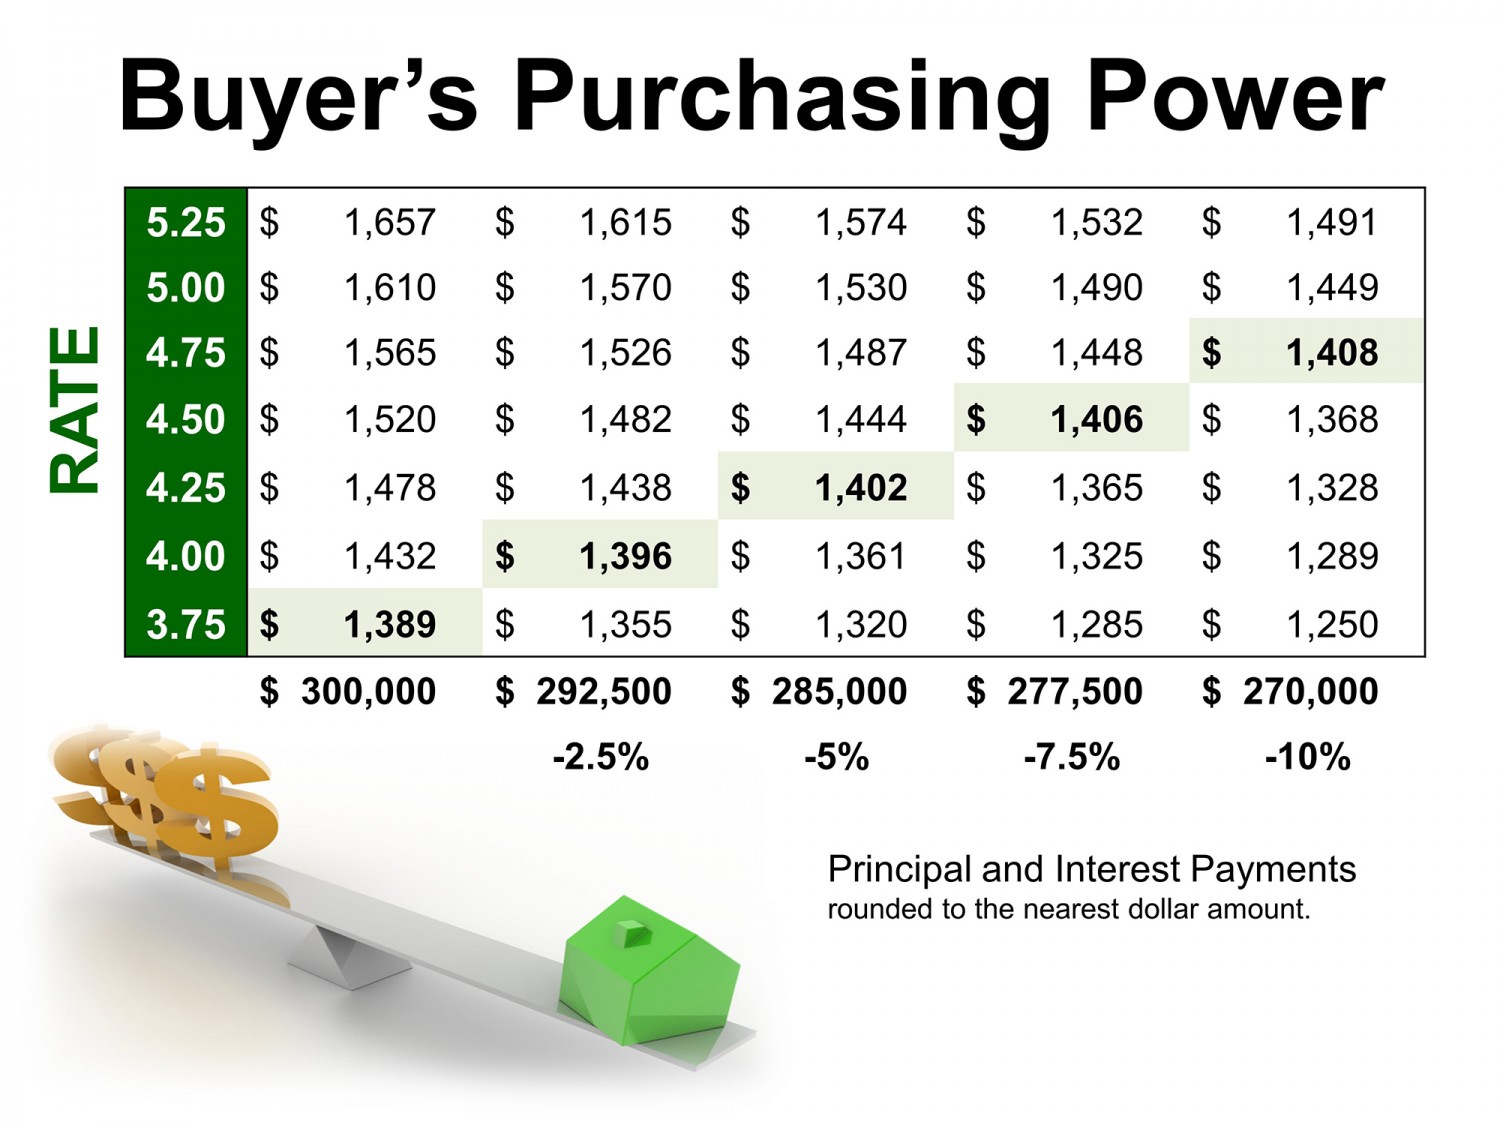 BuyersPurchasingPower3